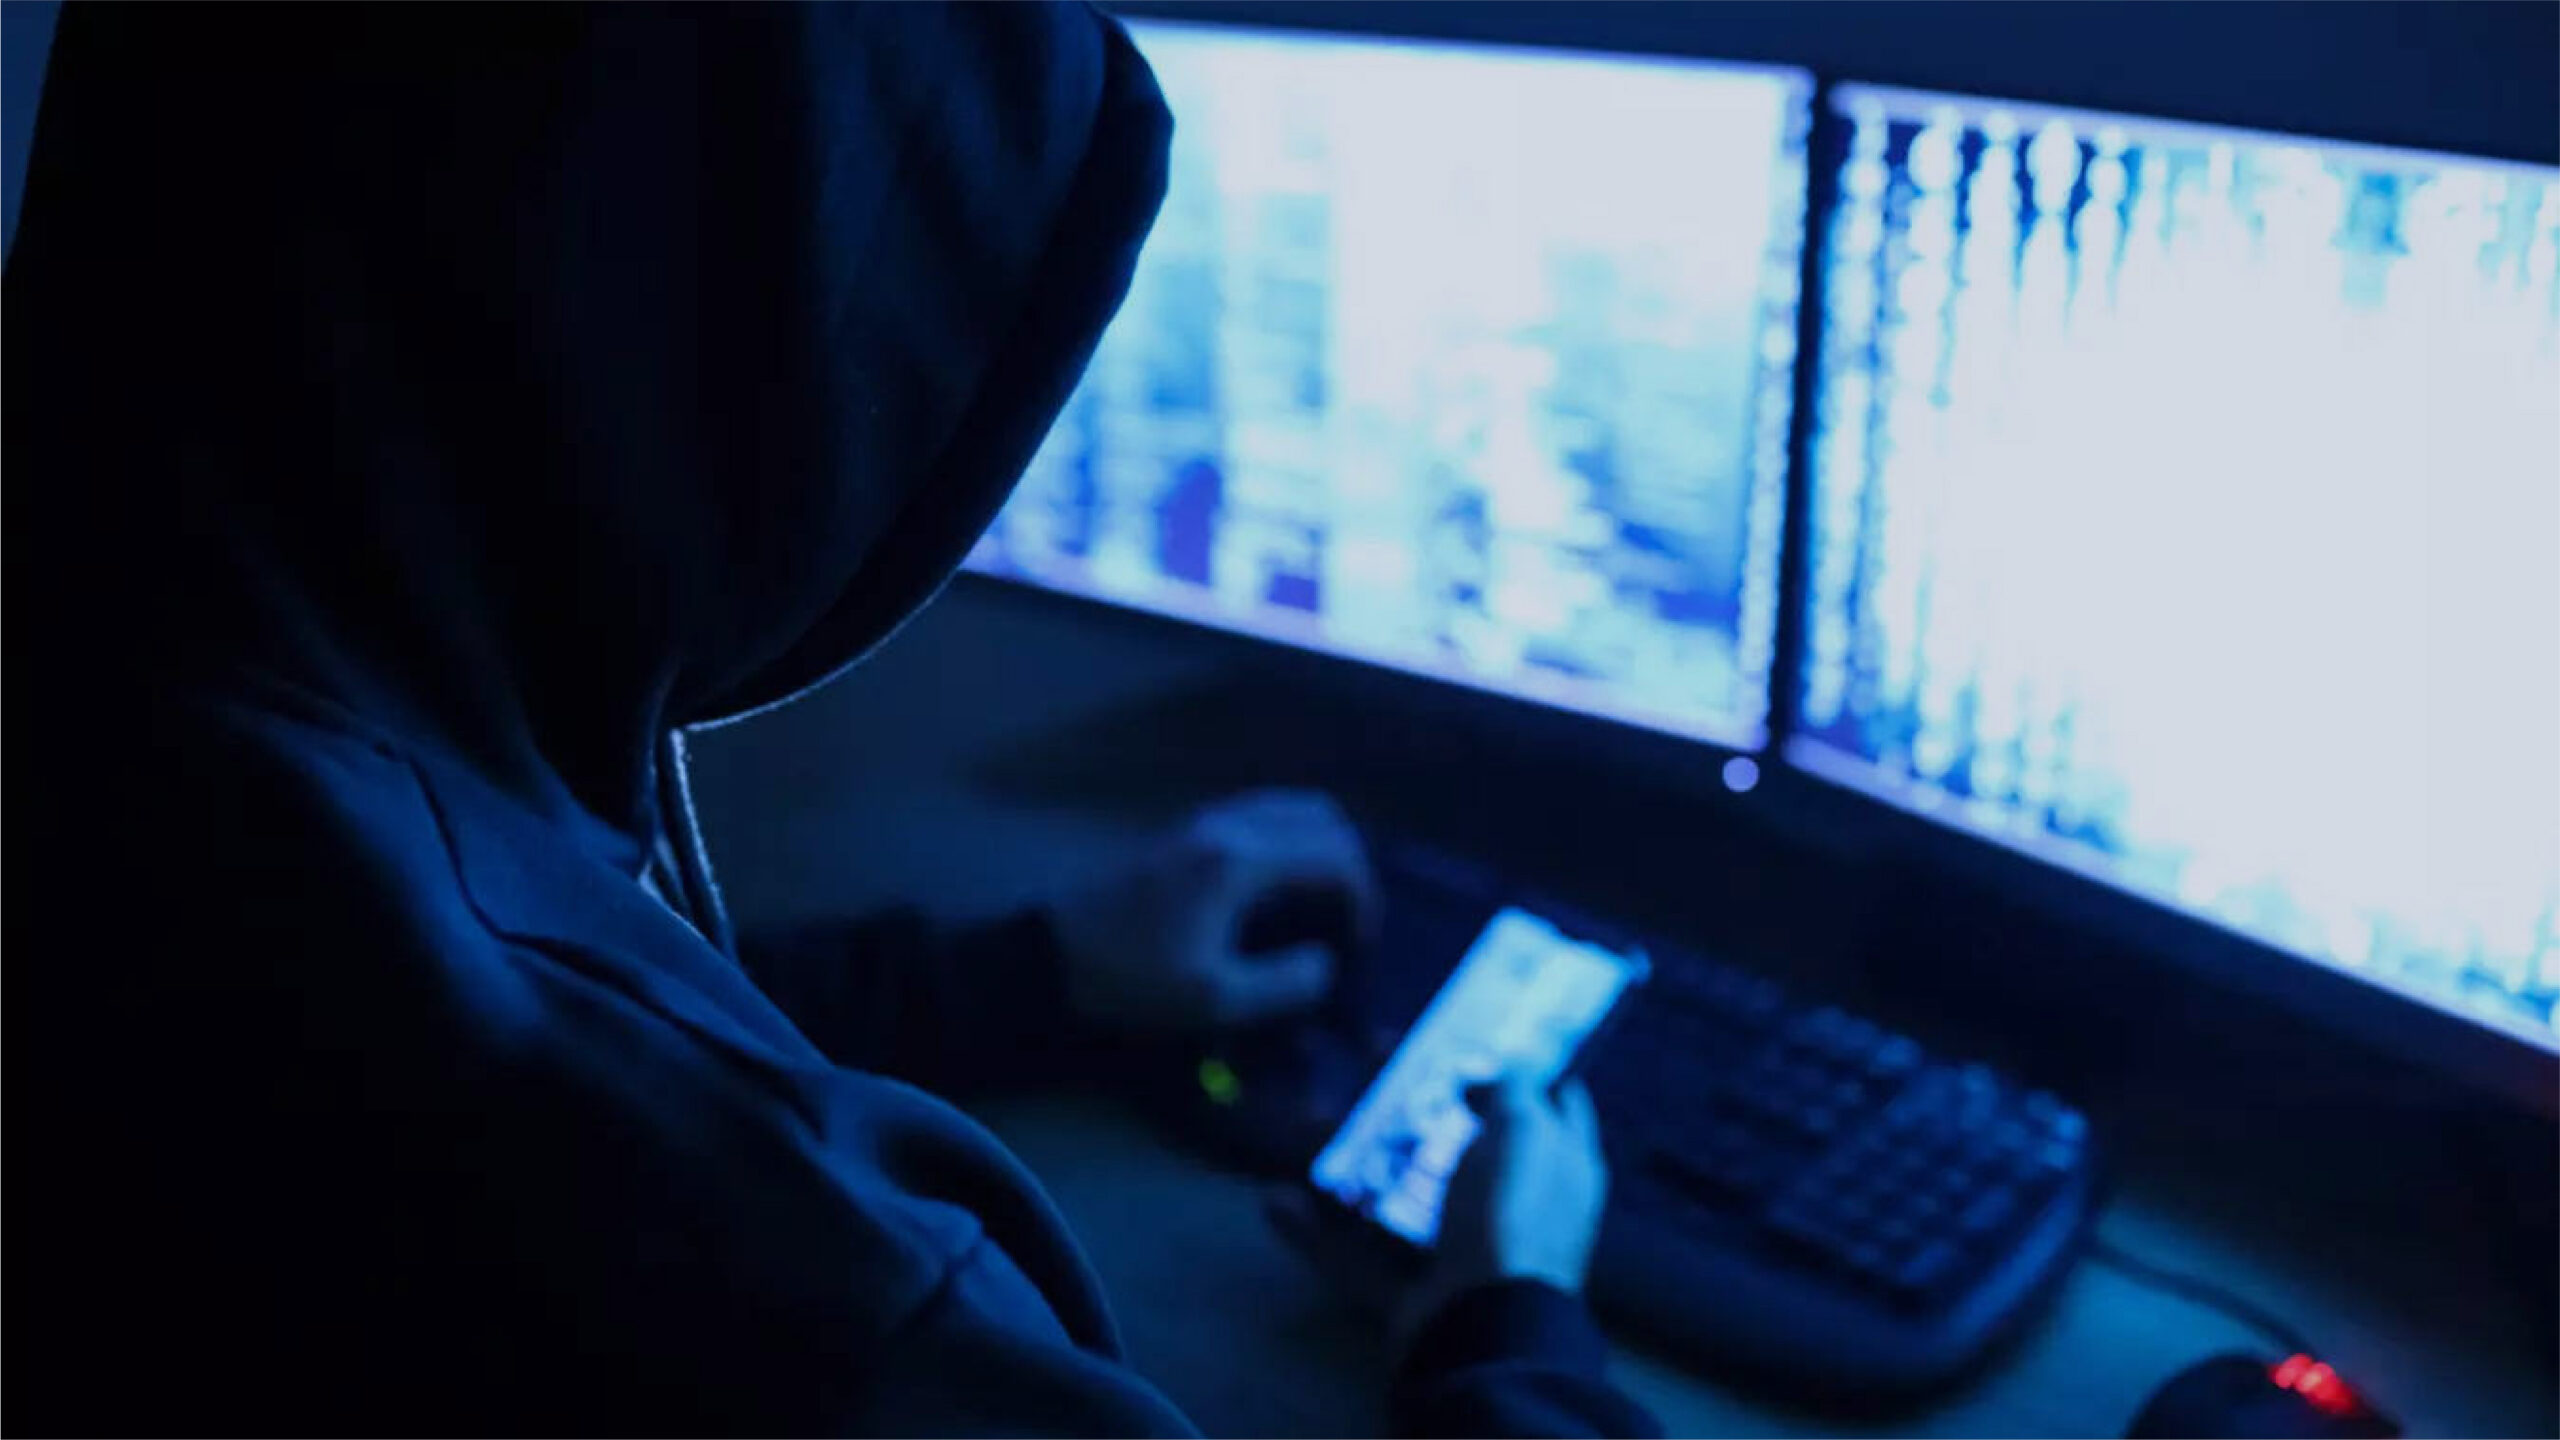 Cybercrime using helpline numbers